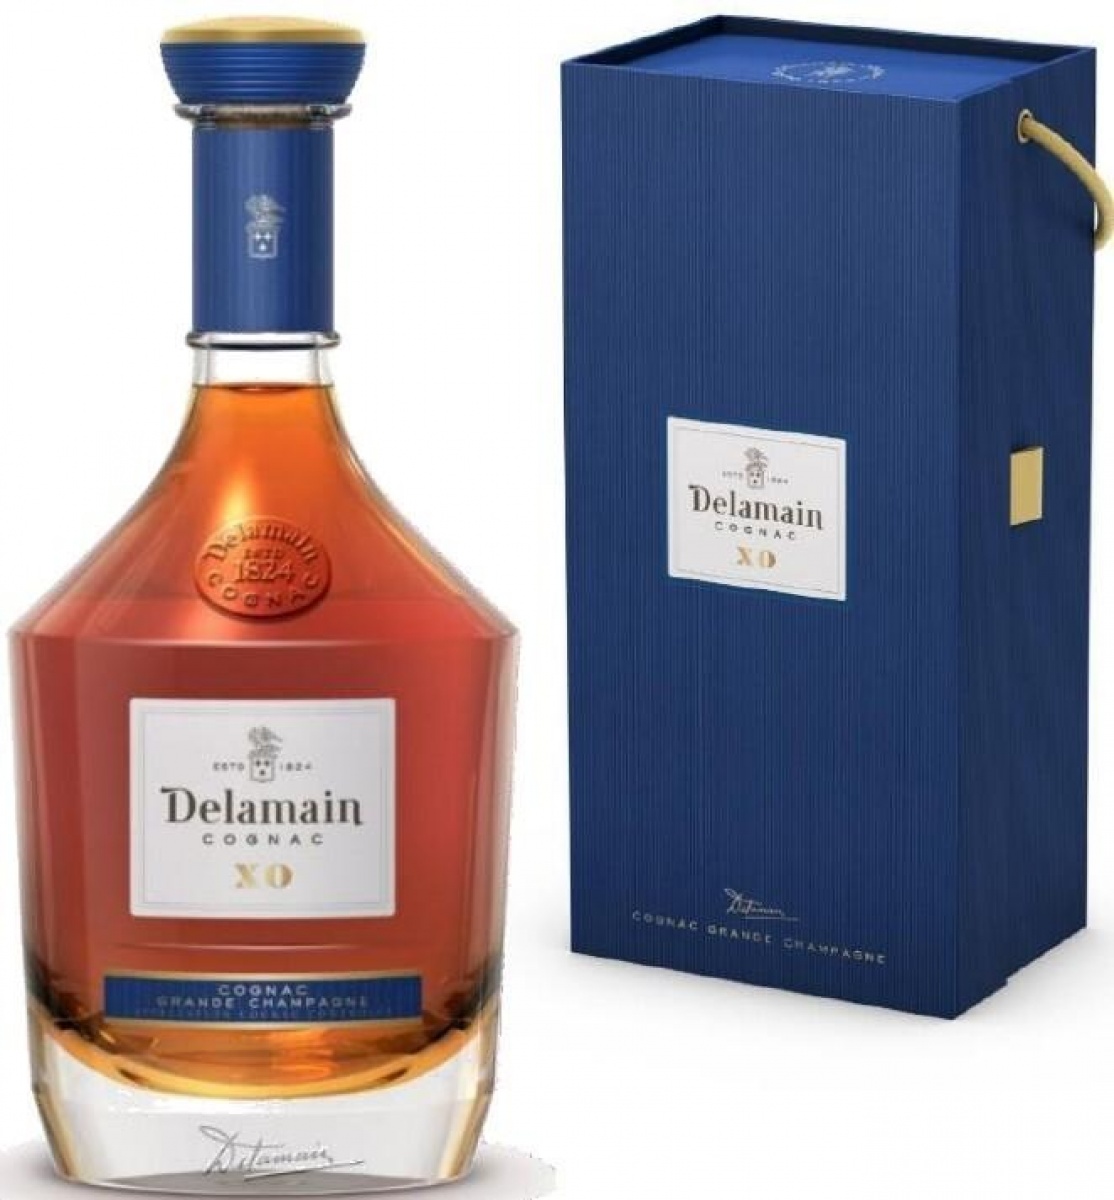 Champagne xo cognac. Delamain Cognac XO. Французский коньяк Delamain. Делямэн Хо Гранд шампань коньяк. Delamain Cognac 1967.